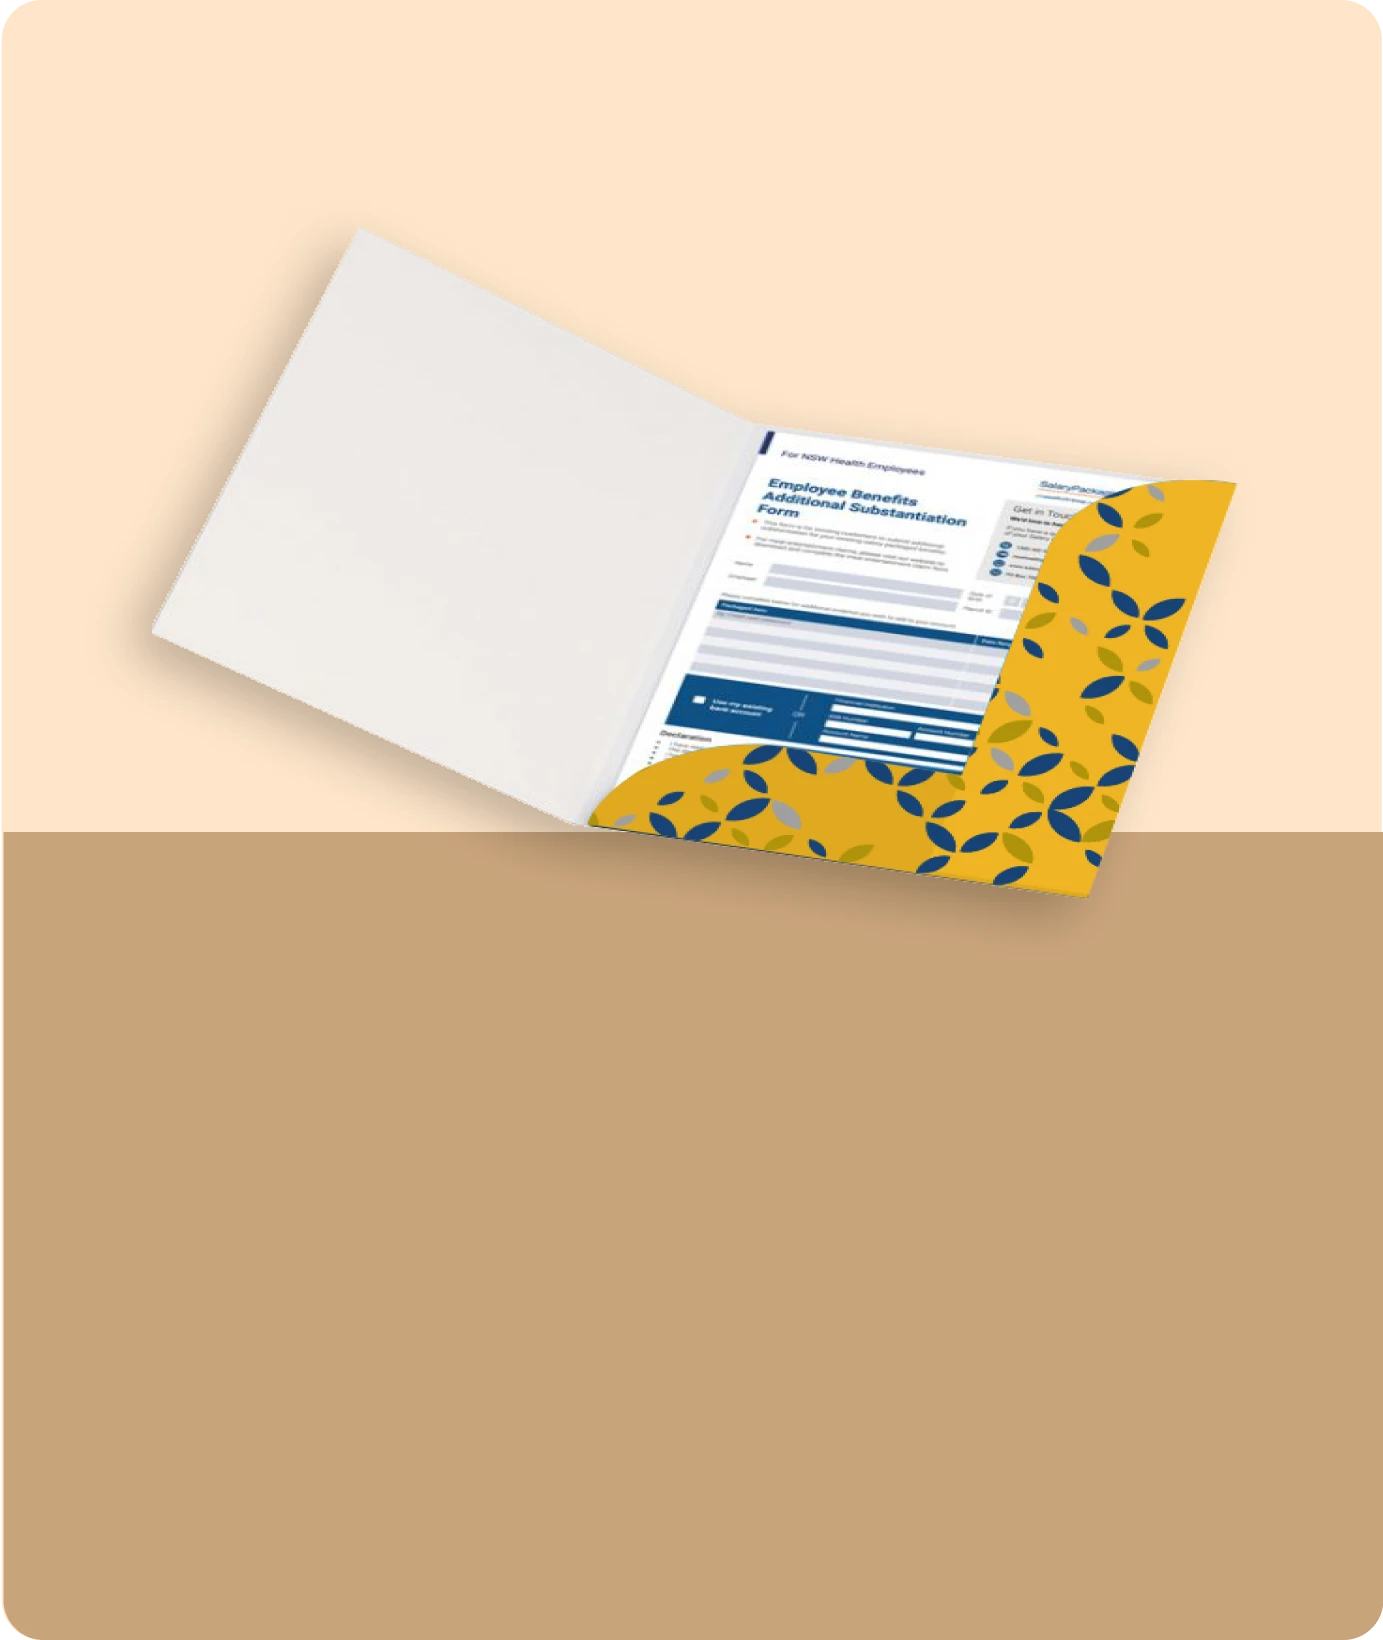 Presentation Folders related product image | The Box Lane